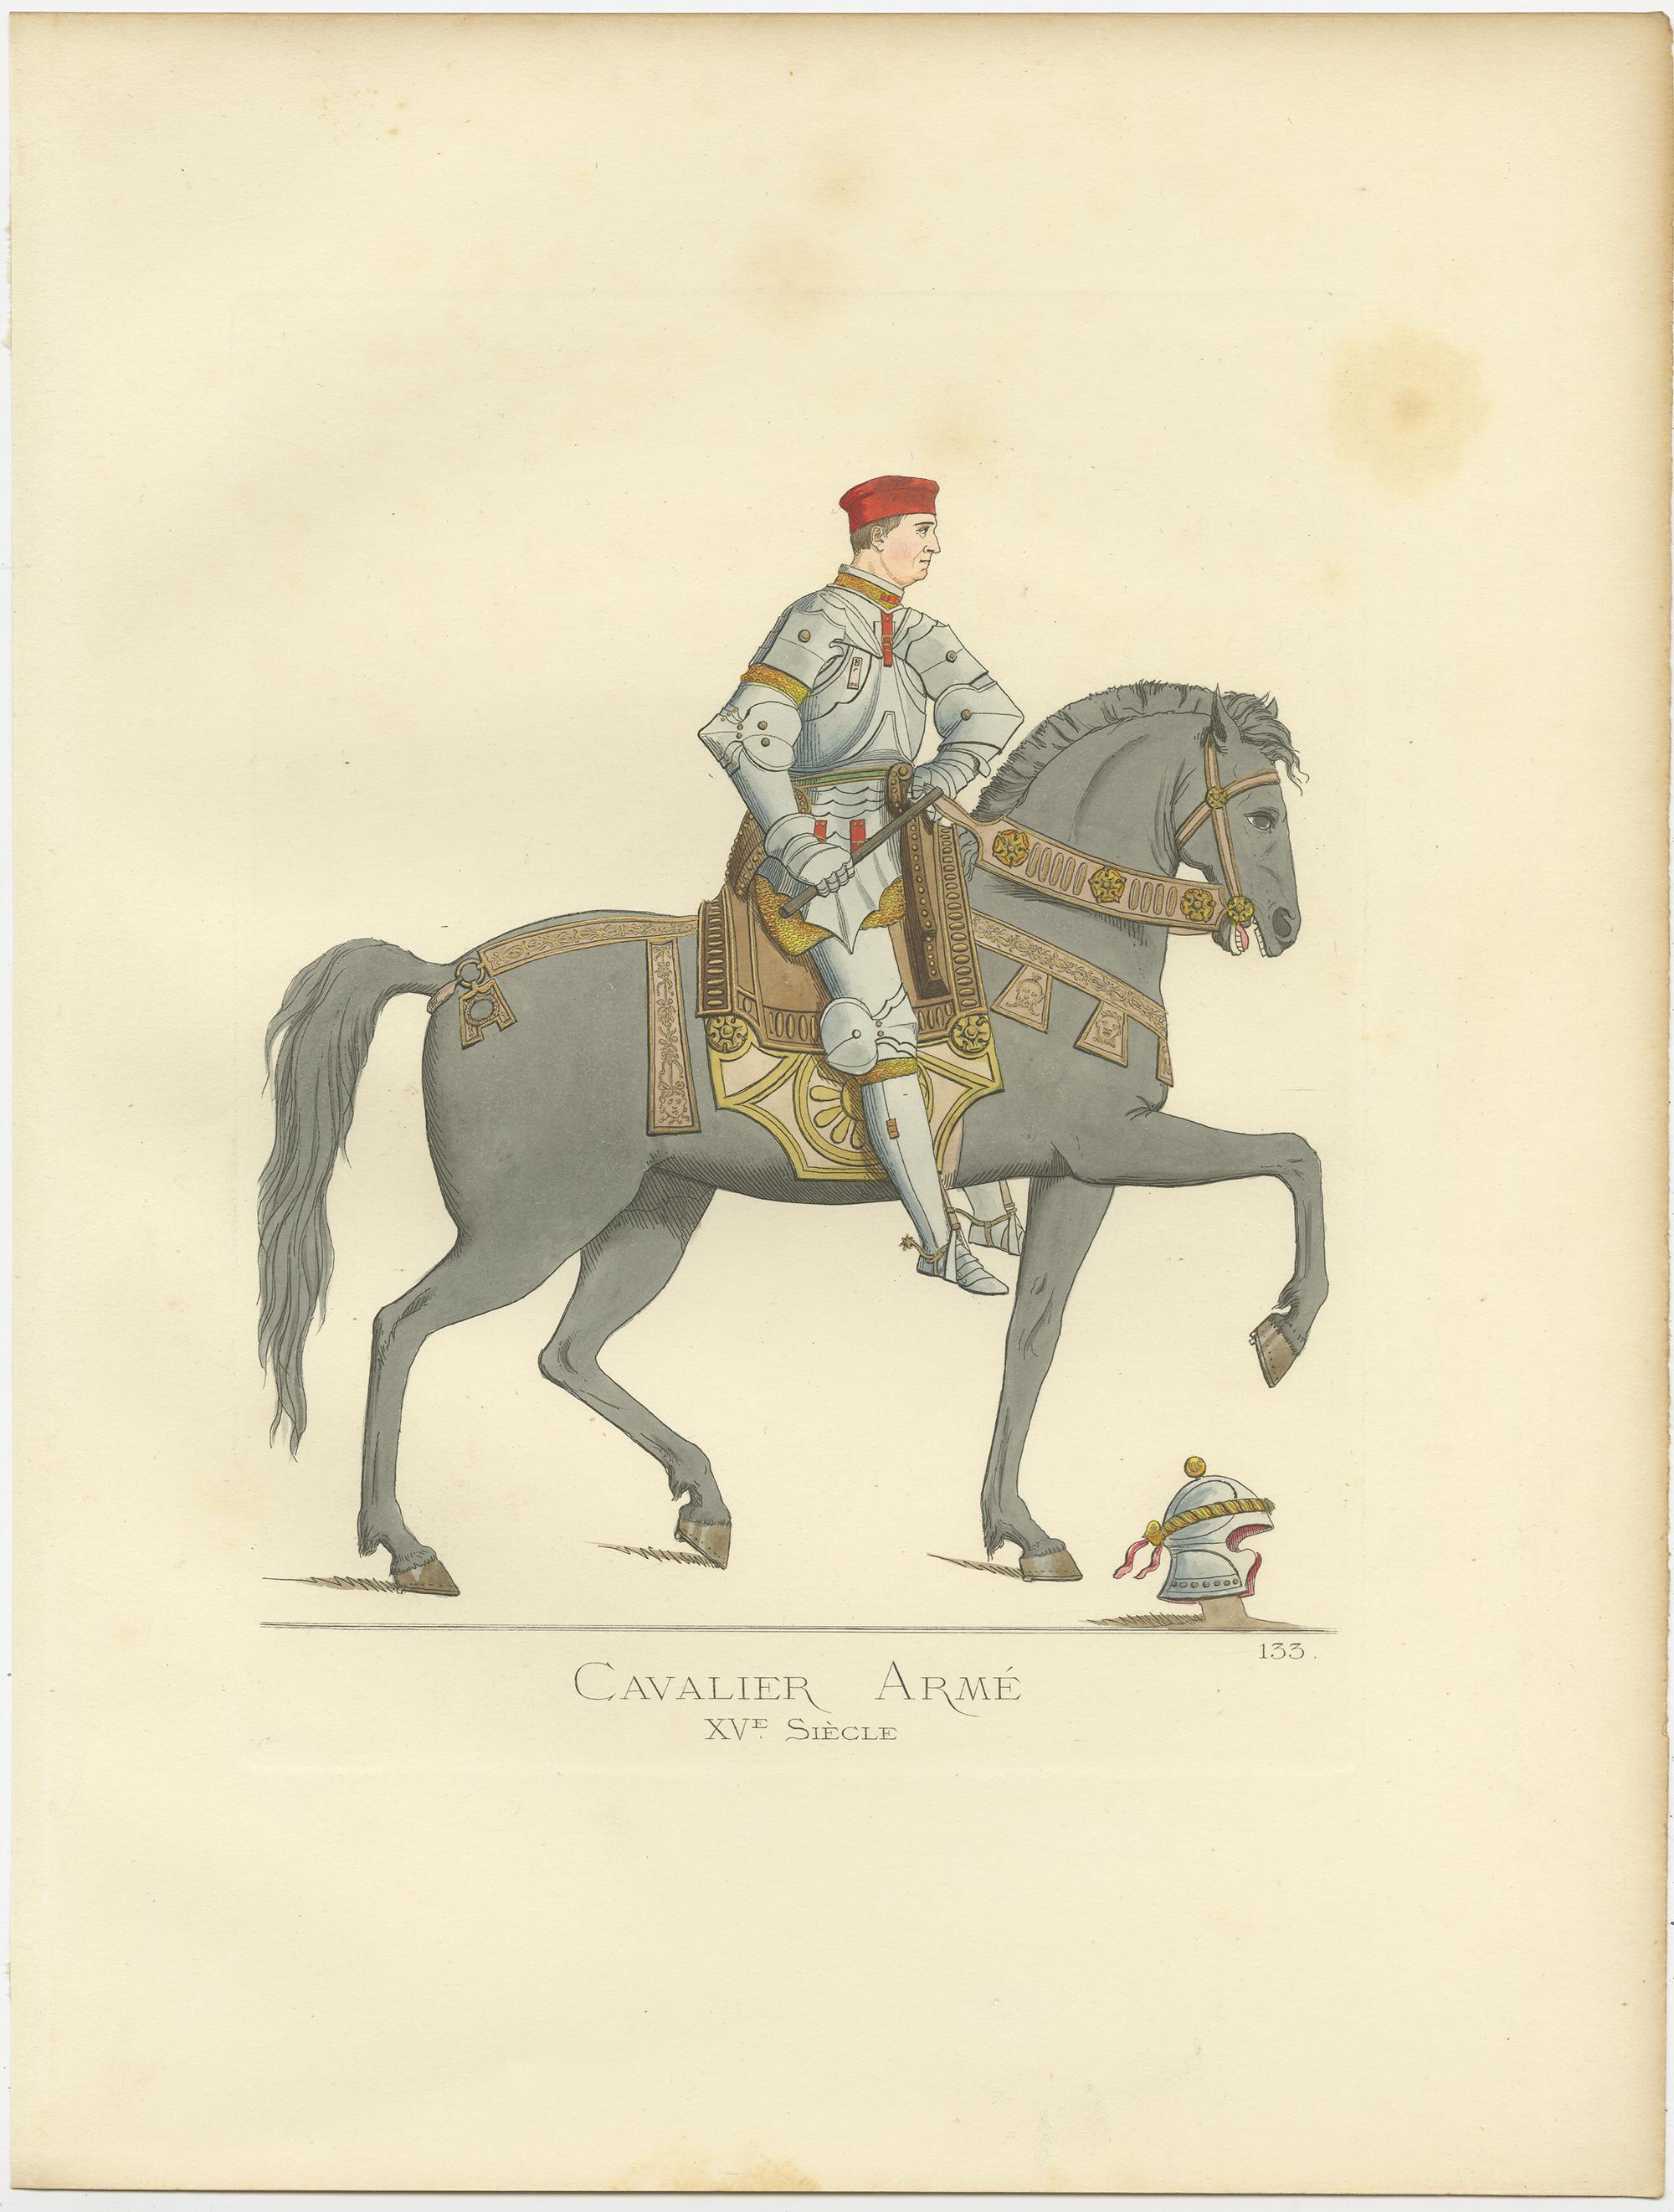 15th century cavalry